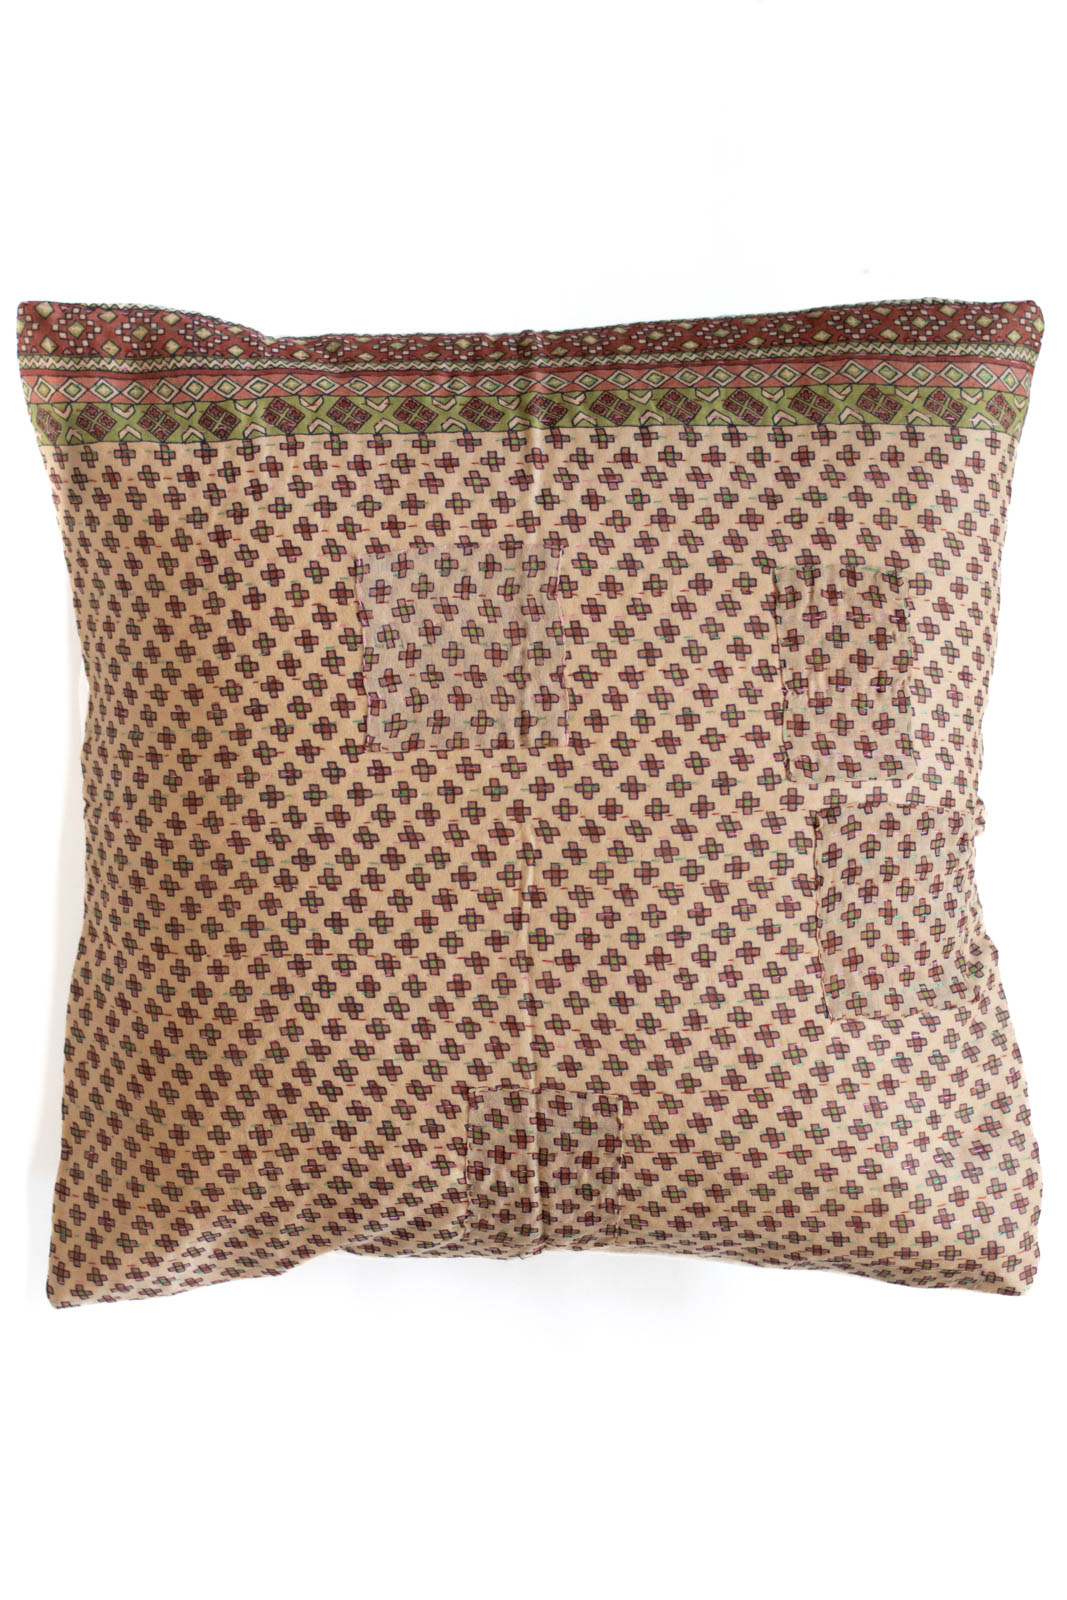 Extraordinary no. 6 Kantha Pillow Cover